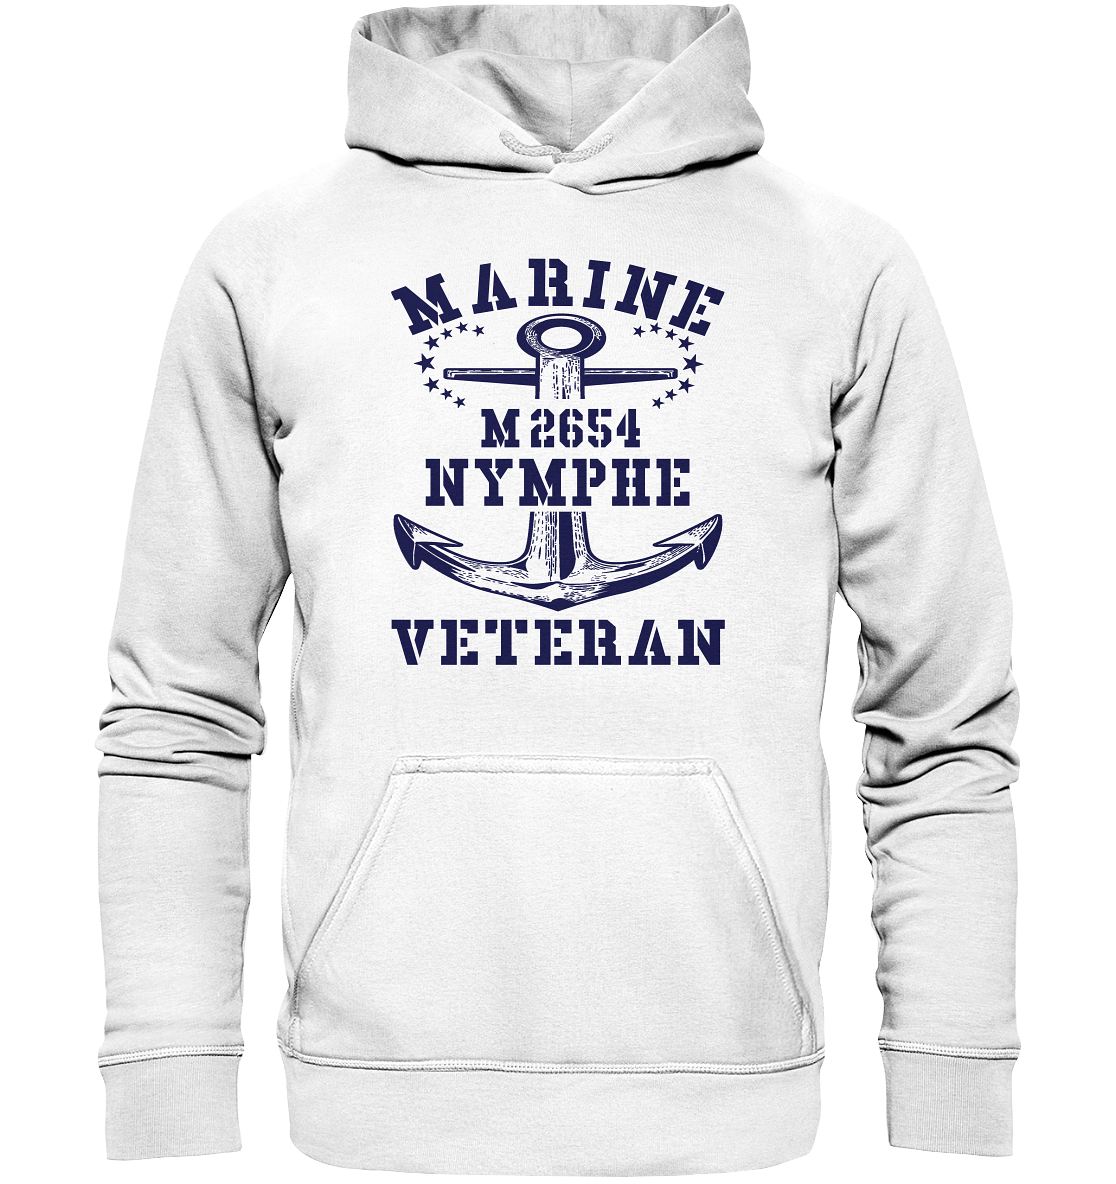 BiMi M2654 NYMPHE Marine Veteran - Basic Unisex Hoodie